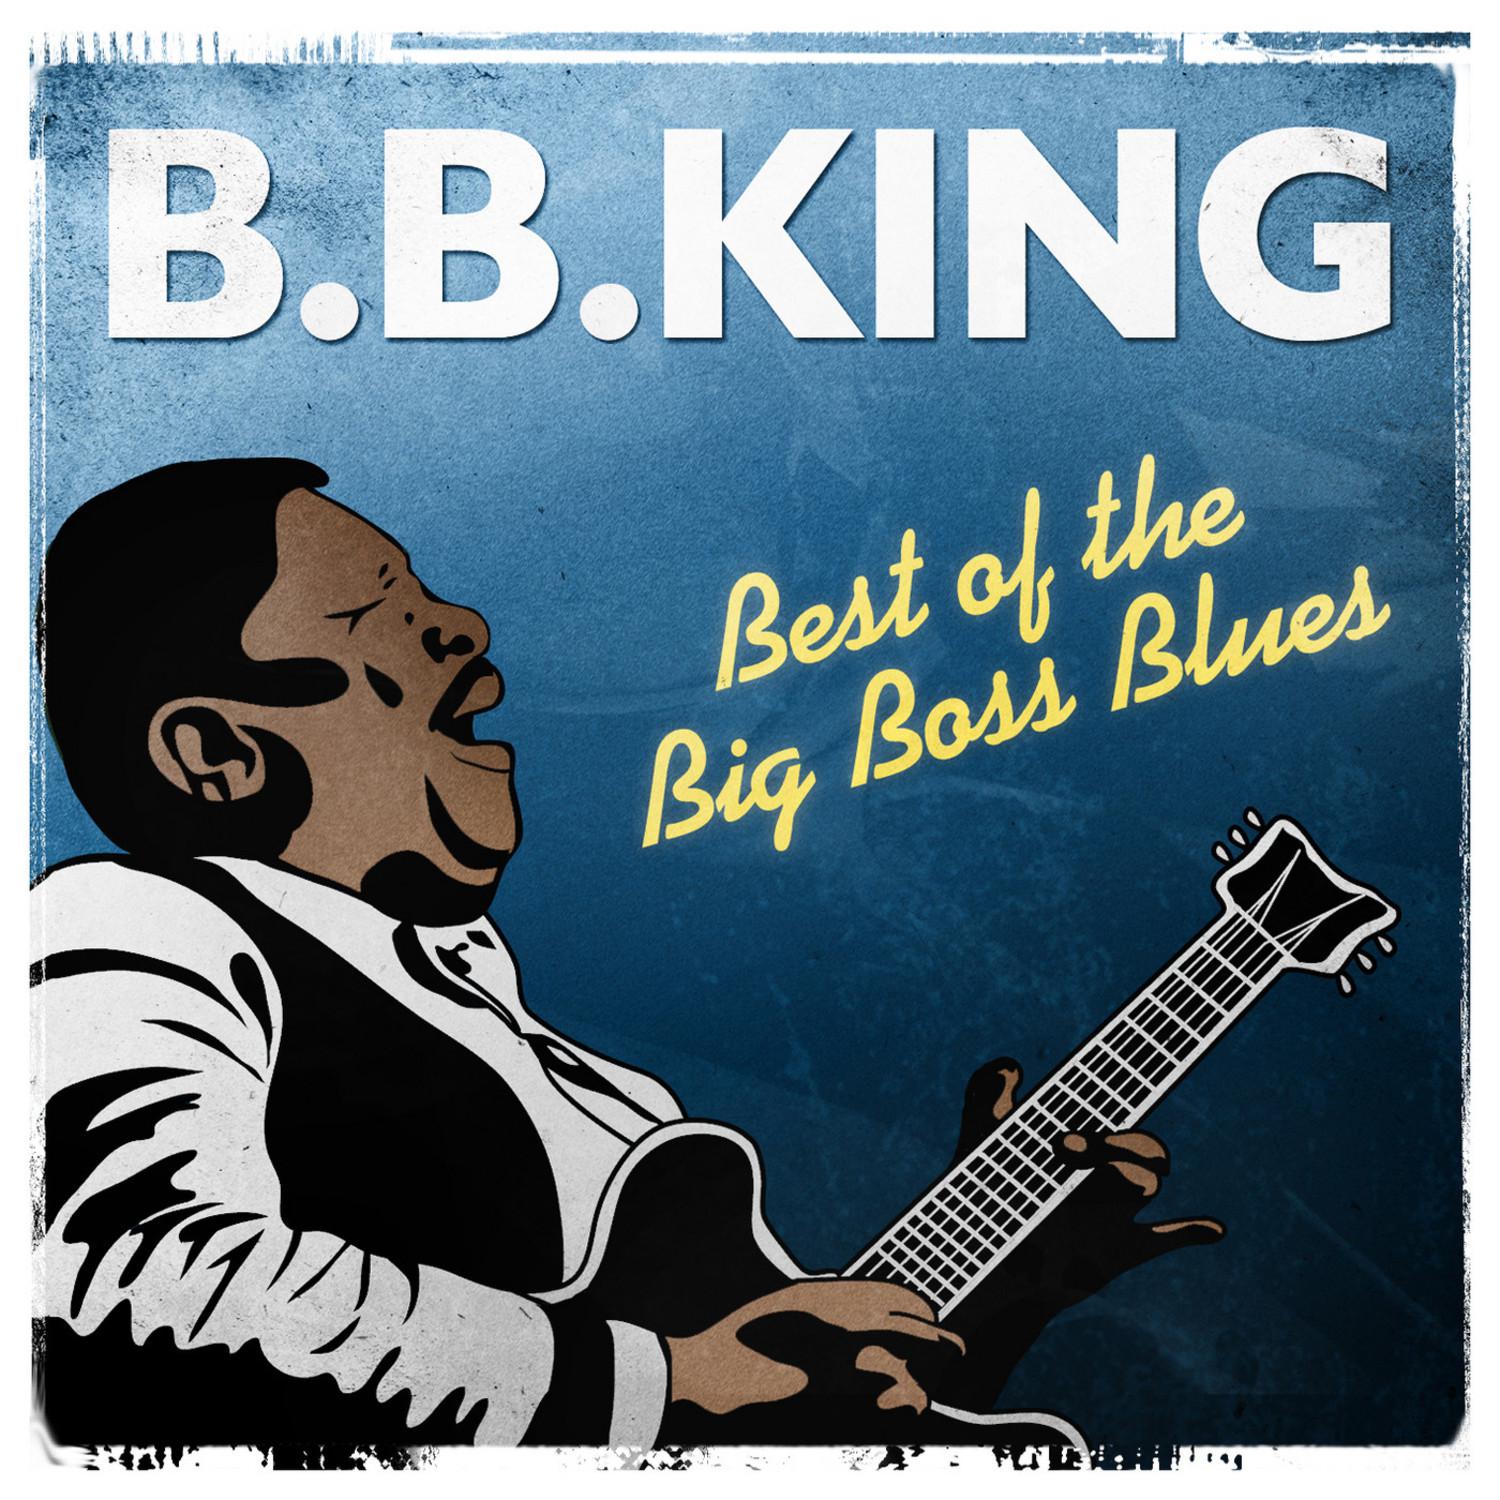 Best of The Big Boss Blues